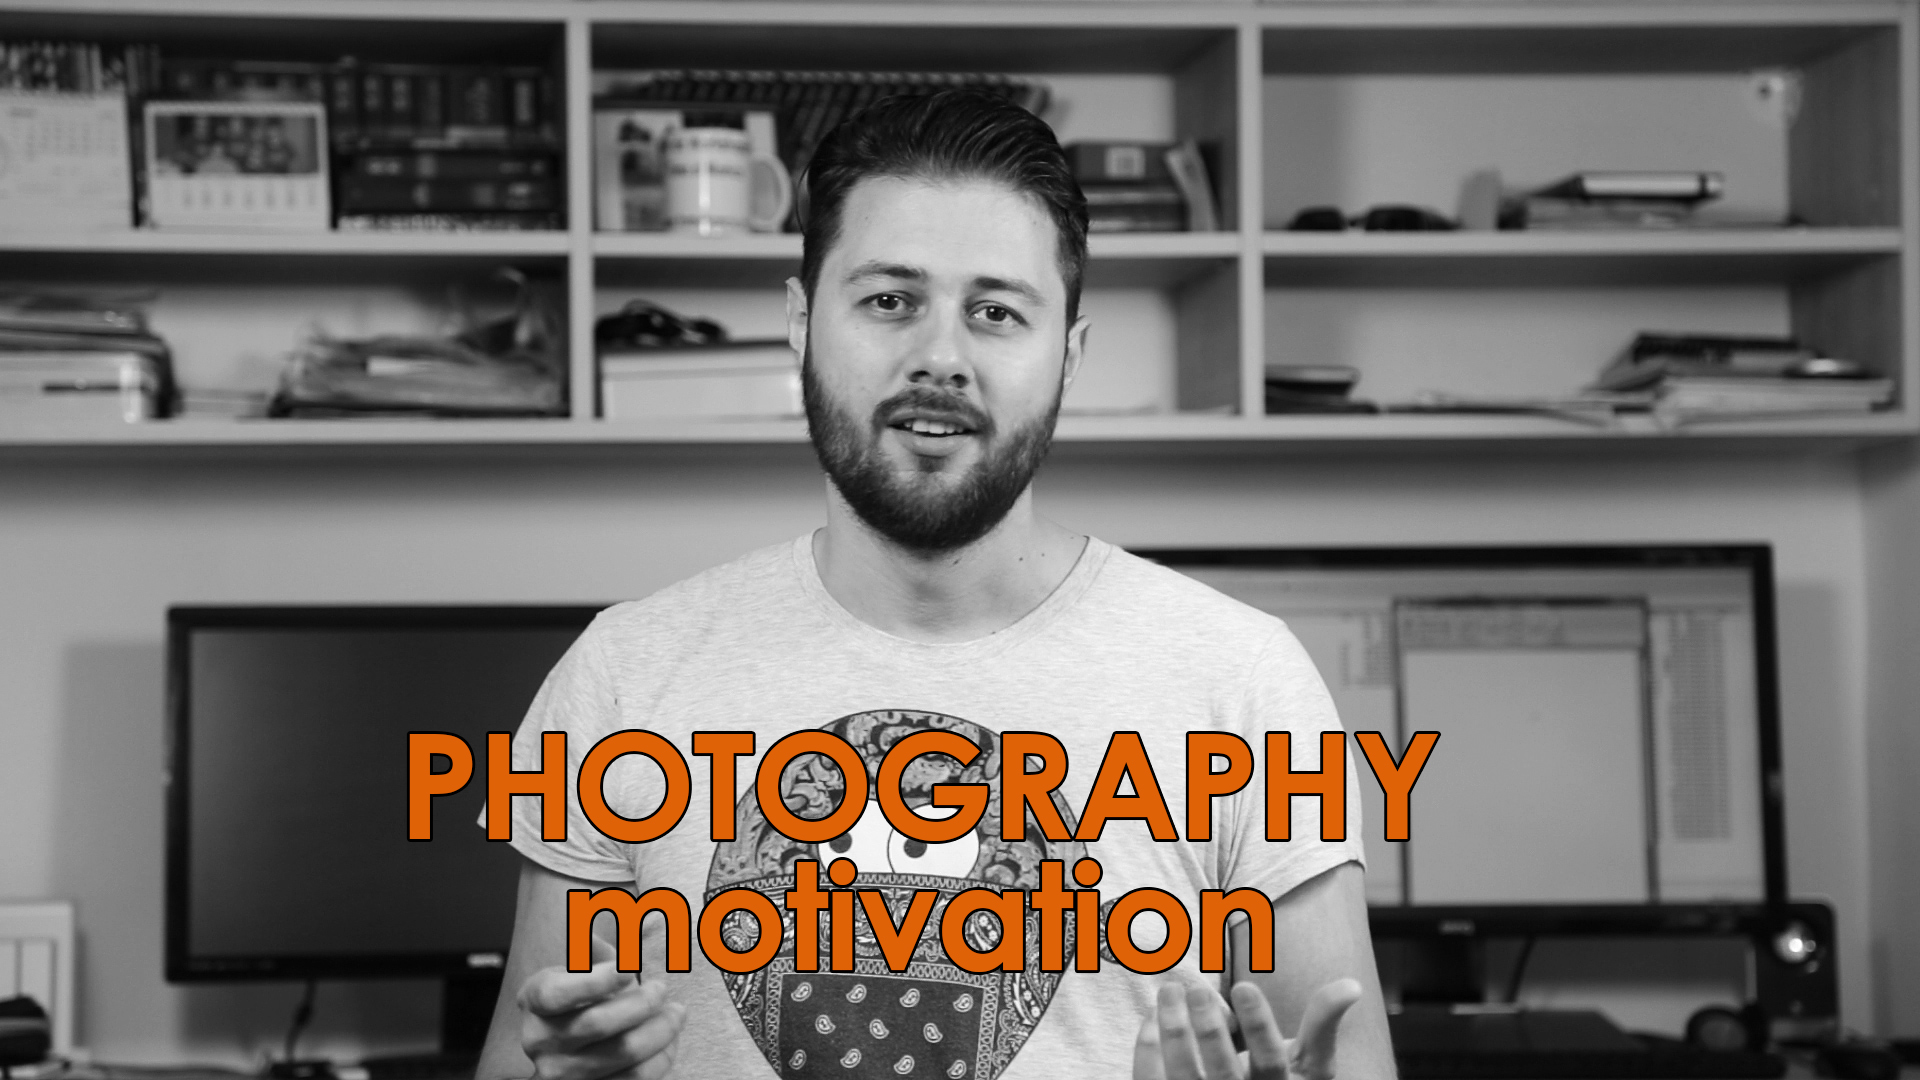 Photography motivation: Use it for self development